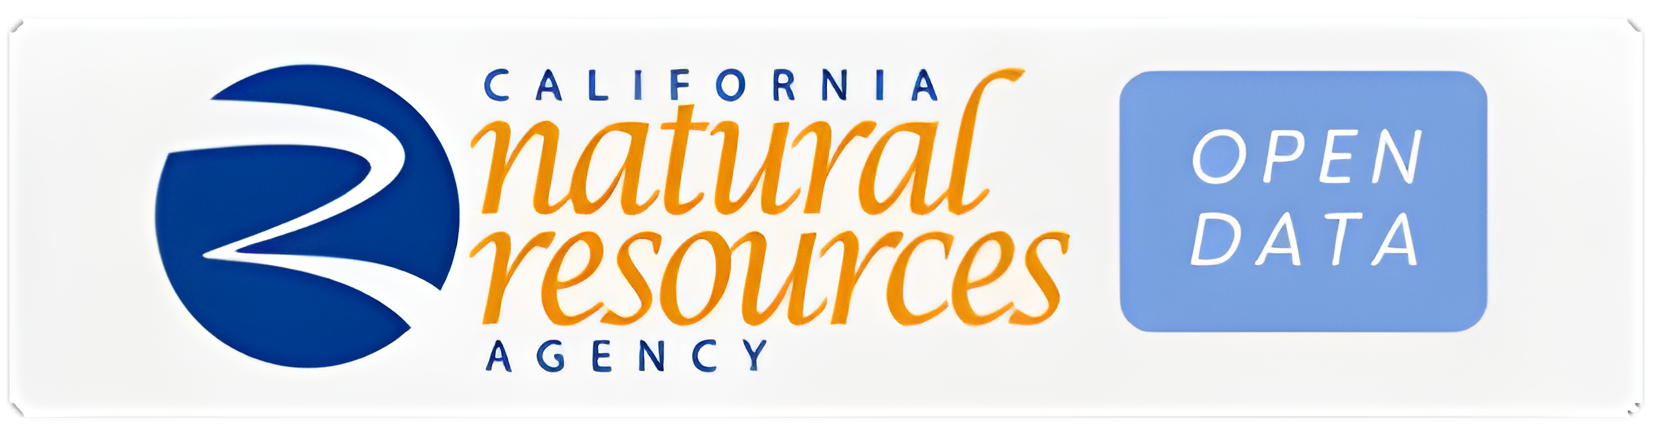 California Natural Resources Agency Open Data Button